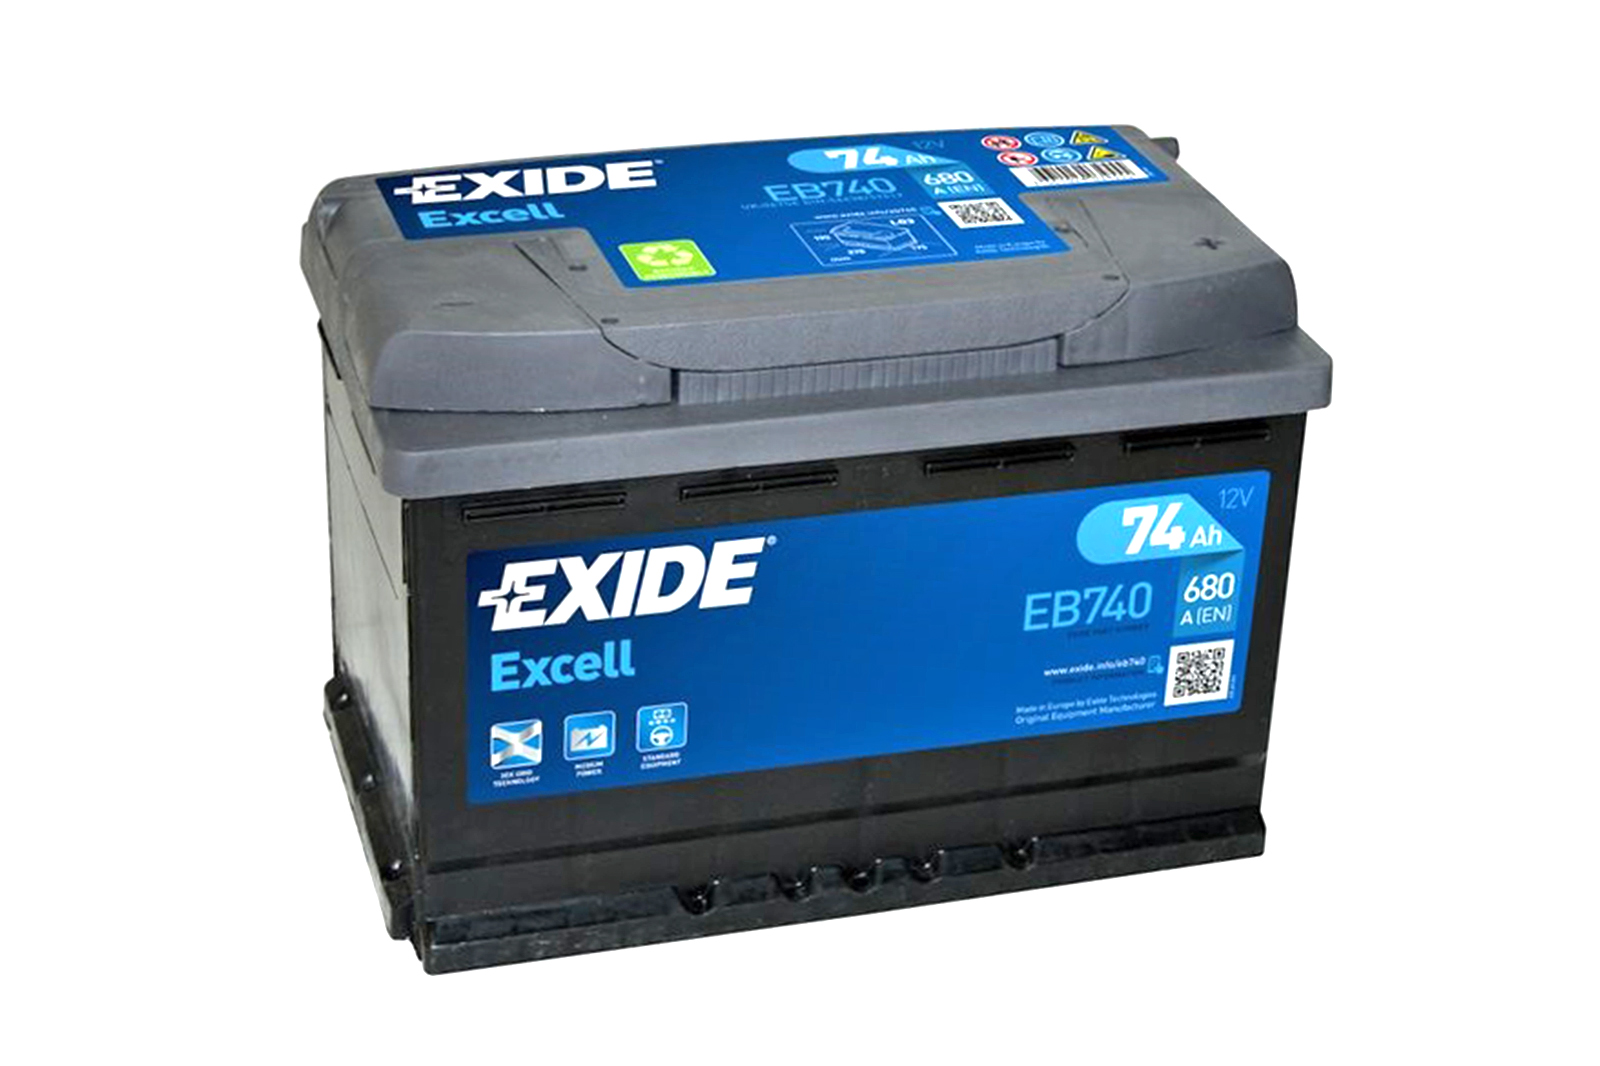 Аккумулятор EXIDE EB740 Excell 12V 74Ah 680A 278х175х190 полярность ETN0 клемы EN крепление B13 фотография №1